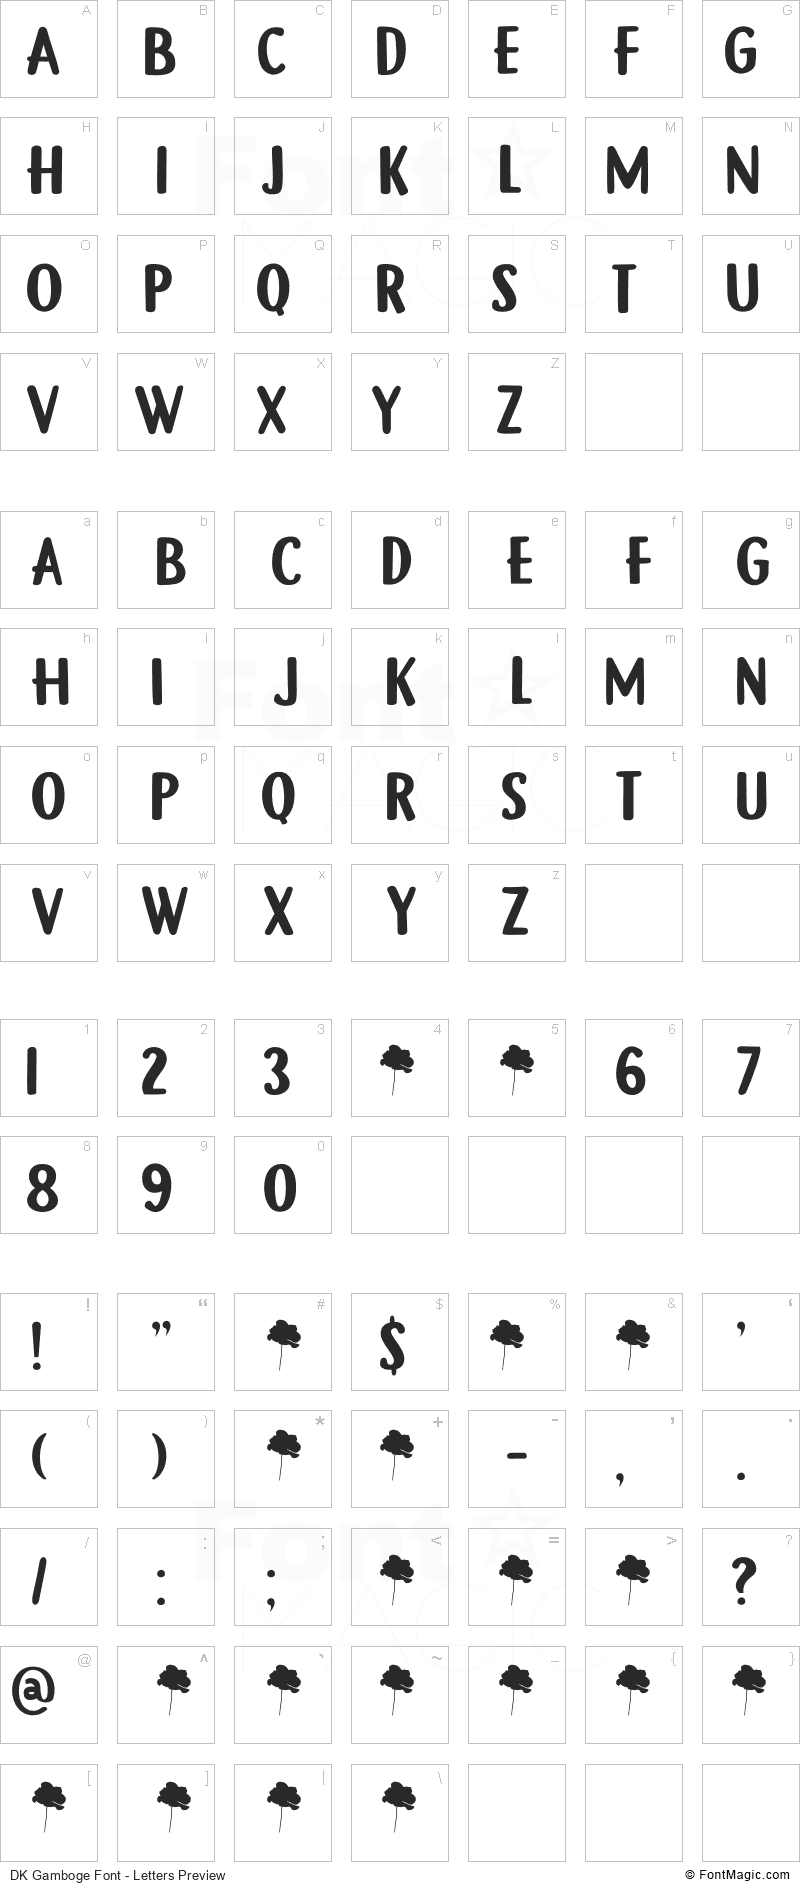 DK Gamboge Font - All Latters Preview Chart